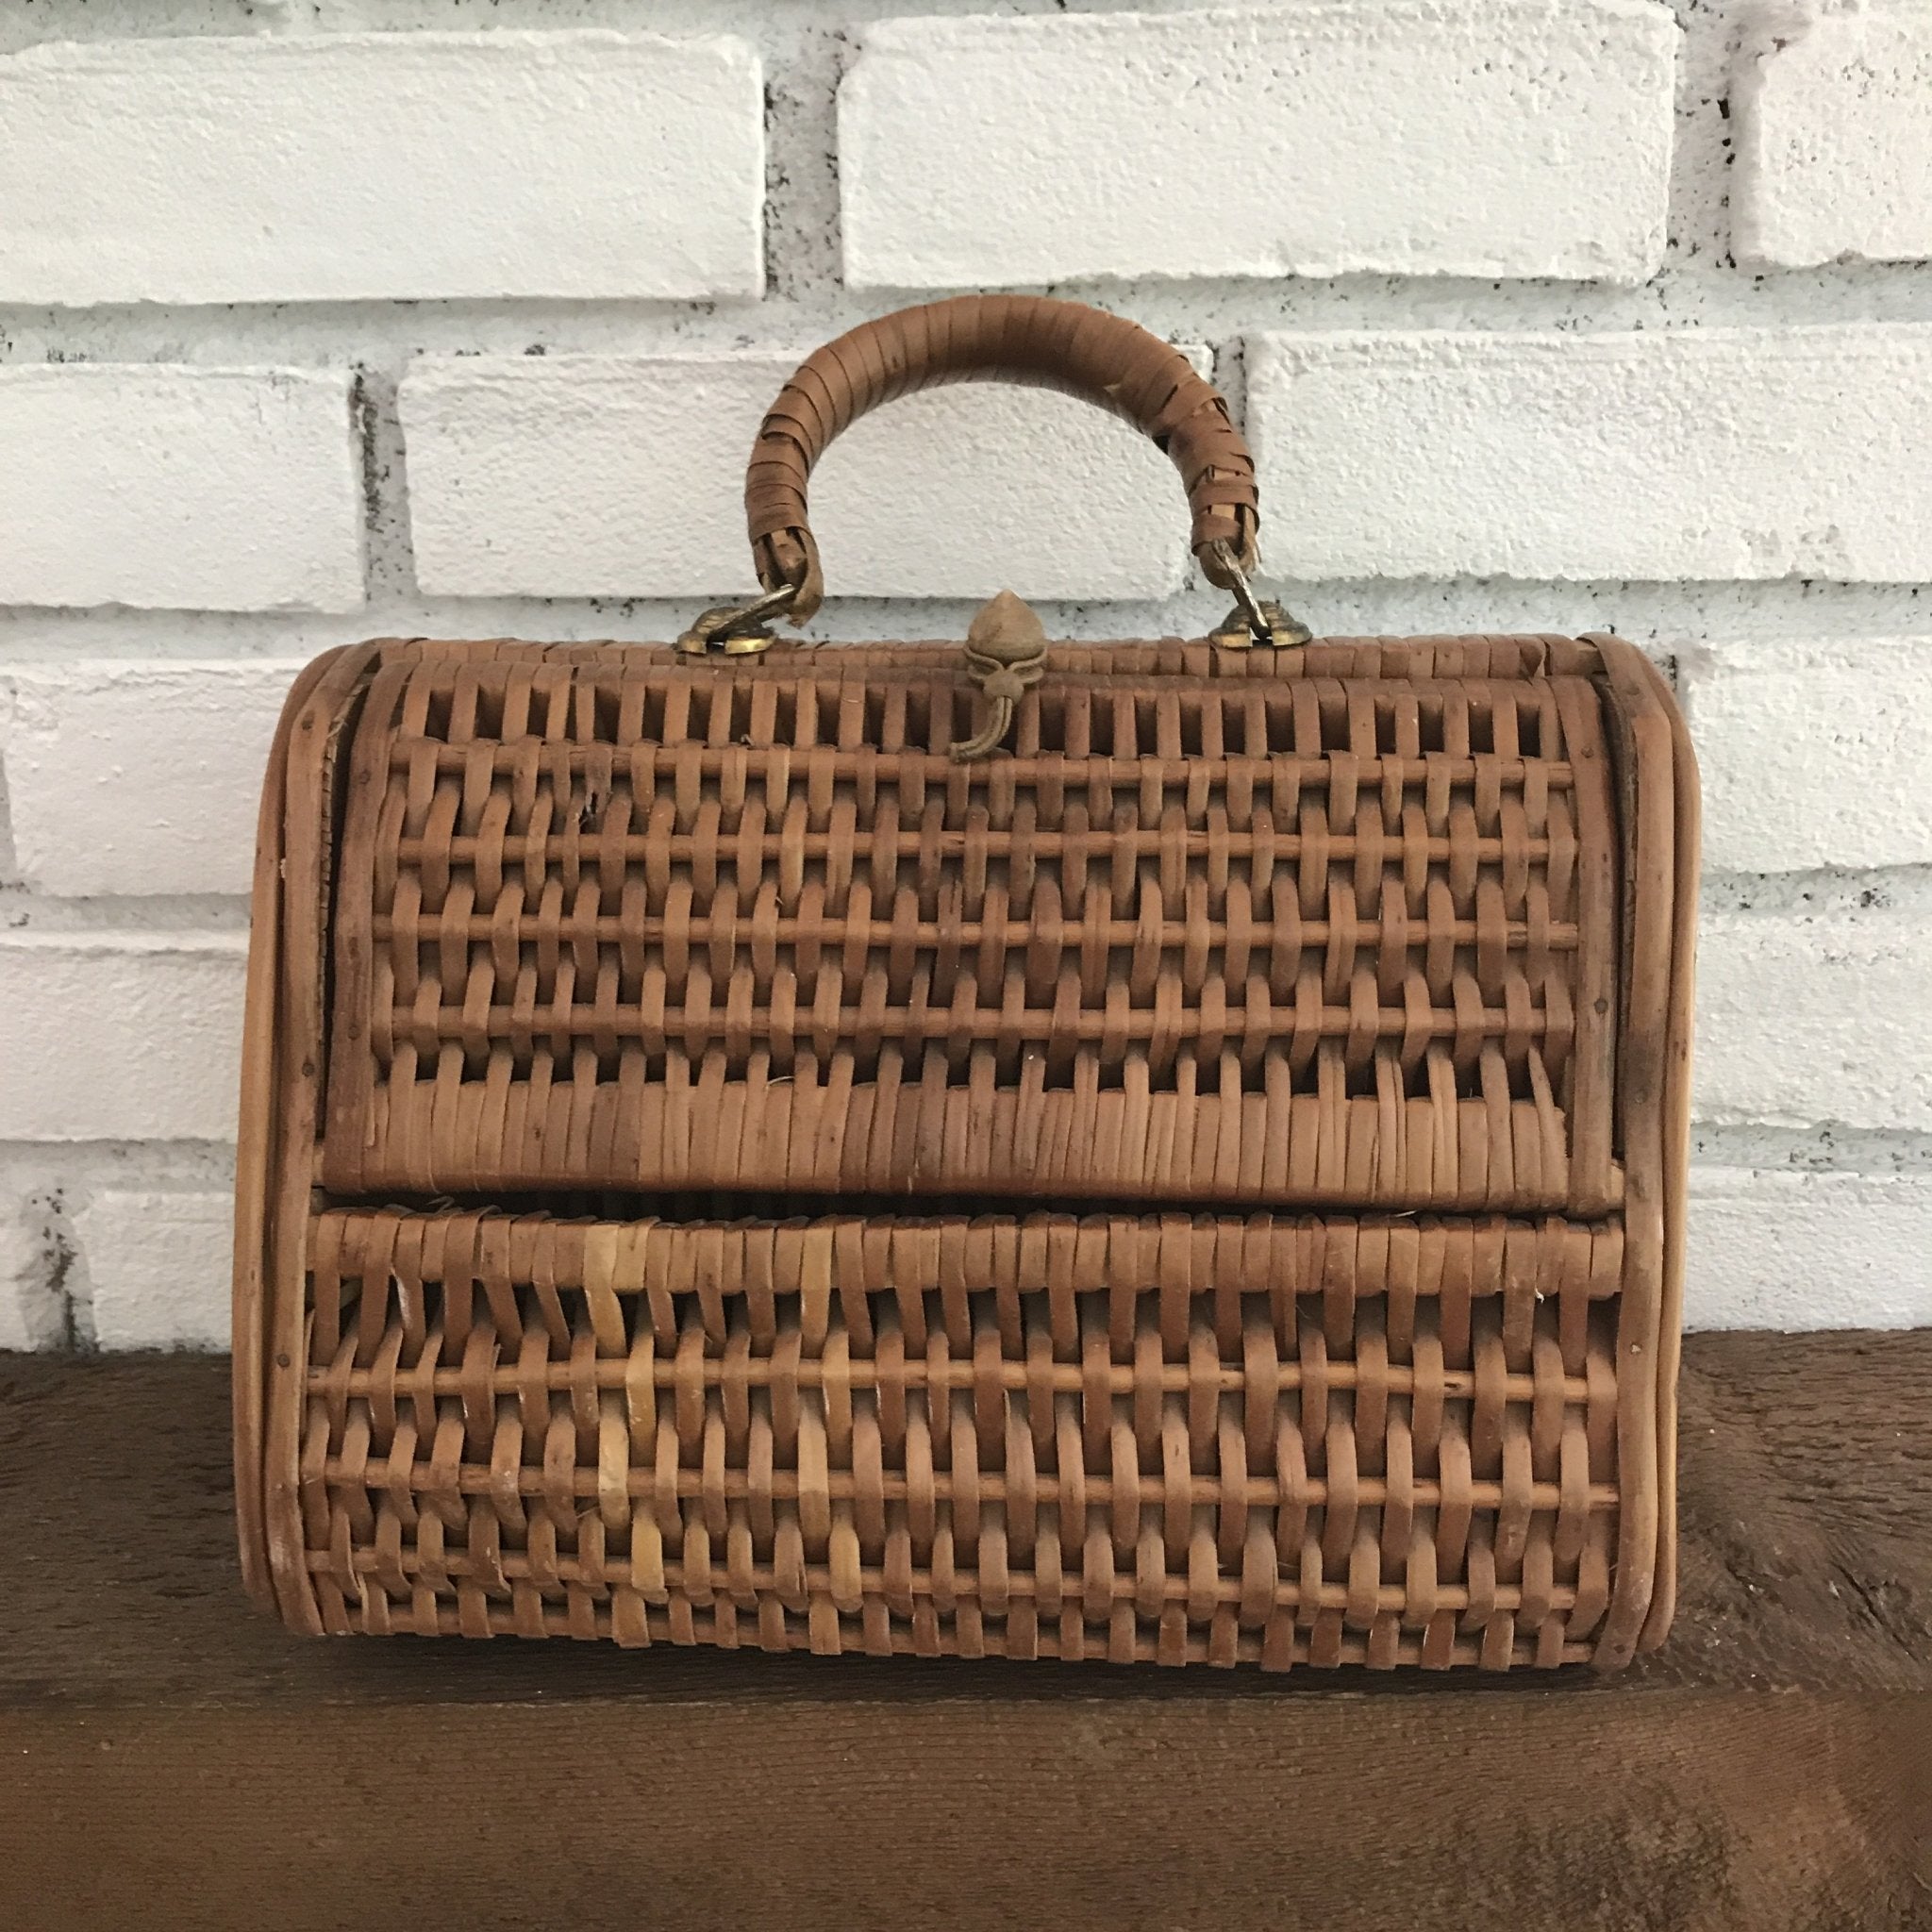 vintage wicker basket purse or handbag 1960s summer purse rattan box purse gift for her 698589